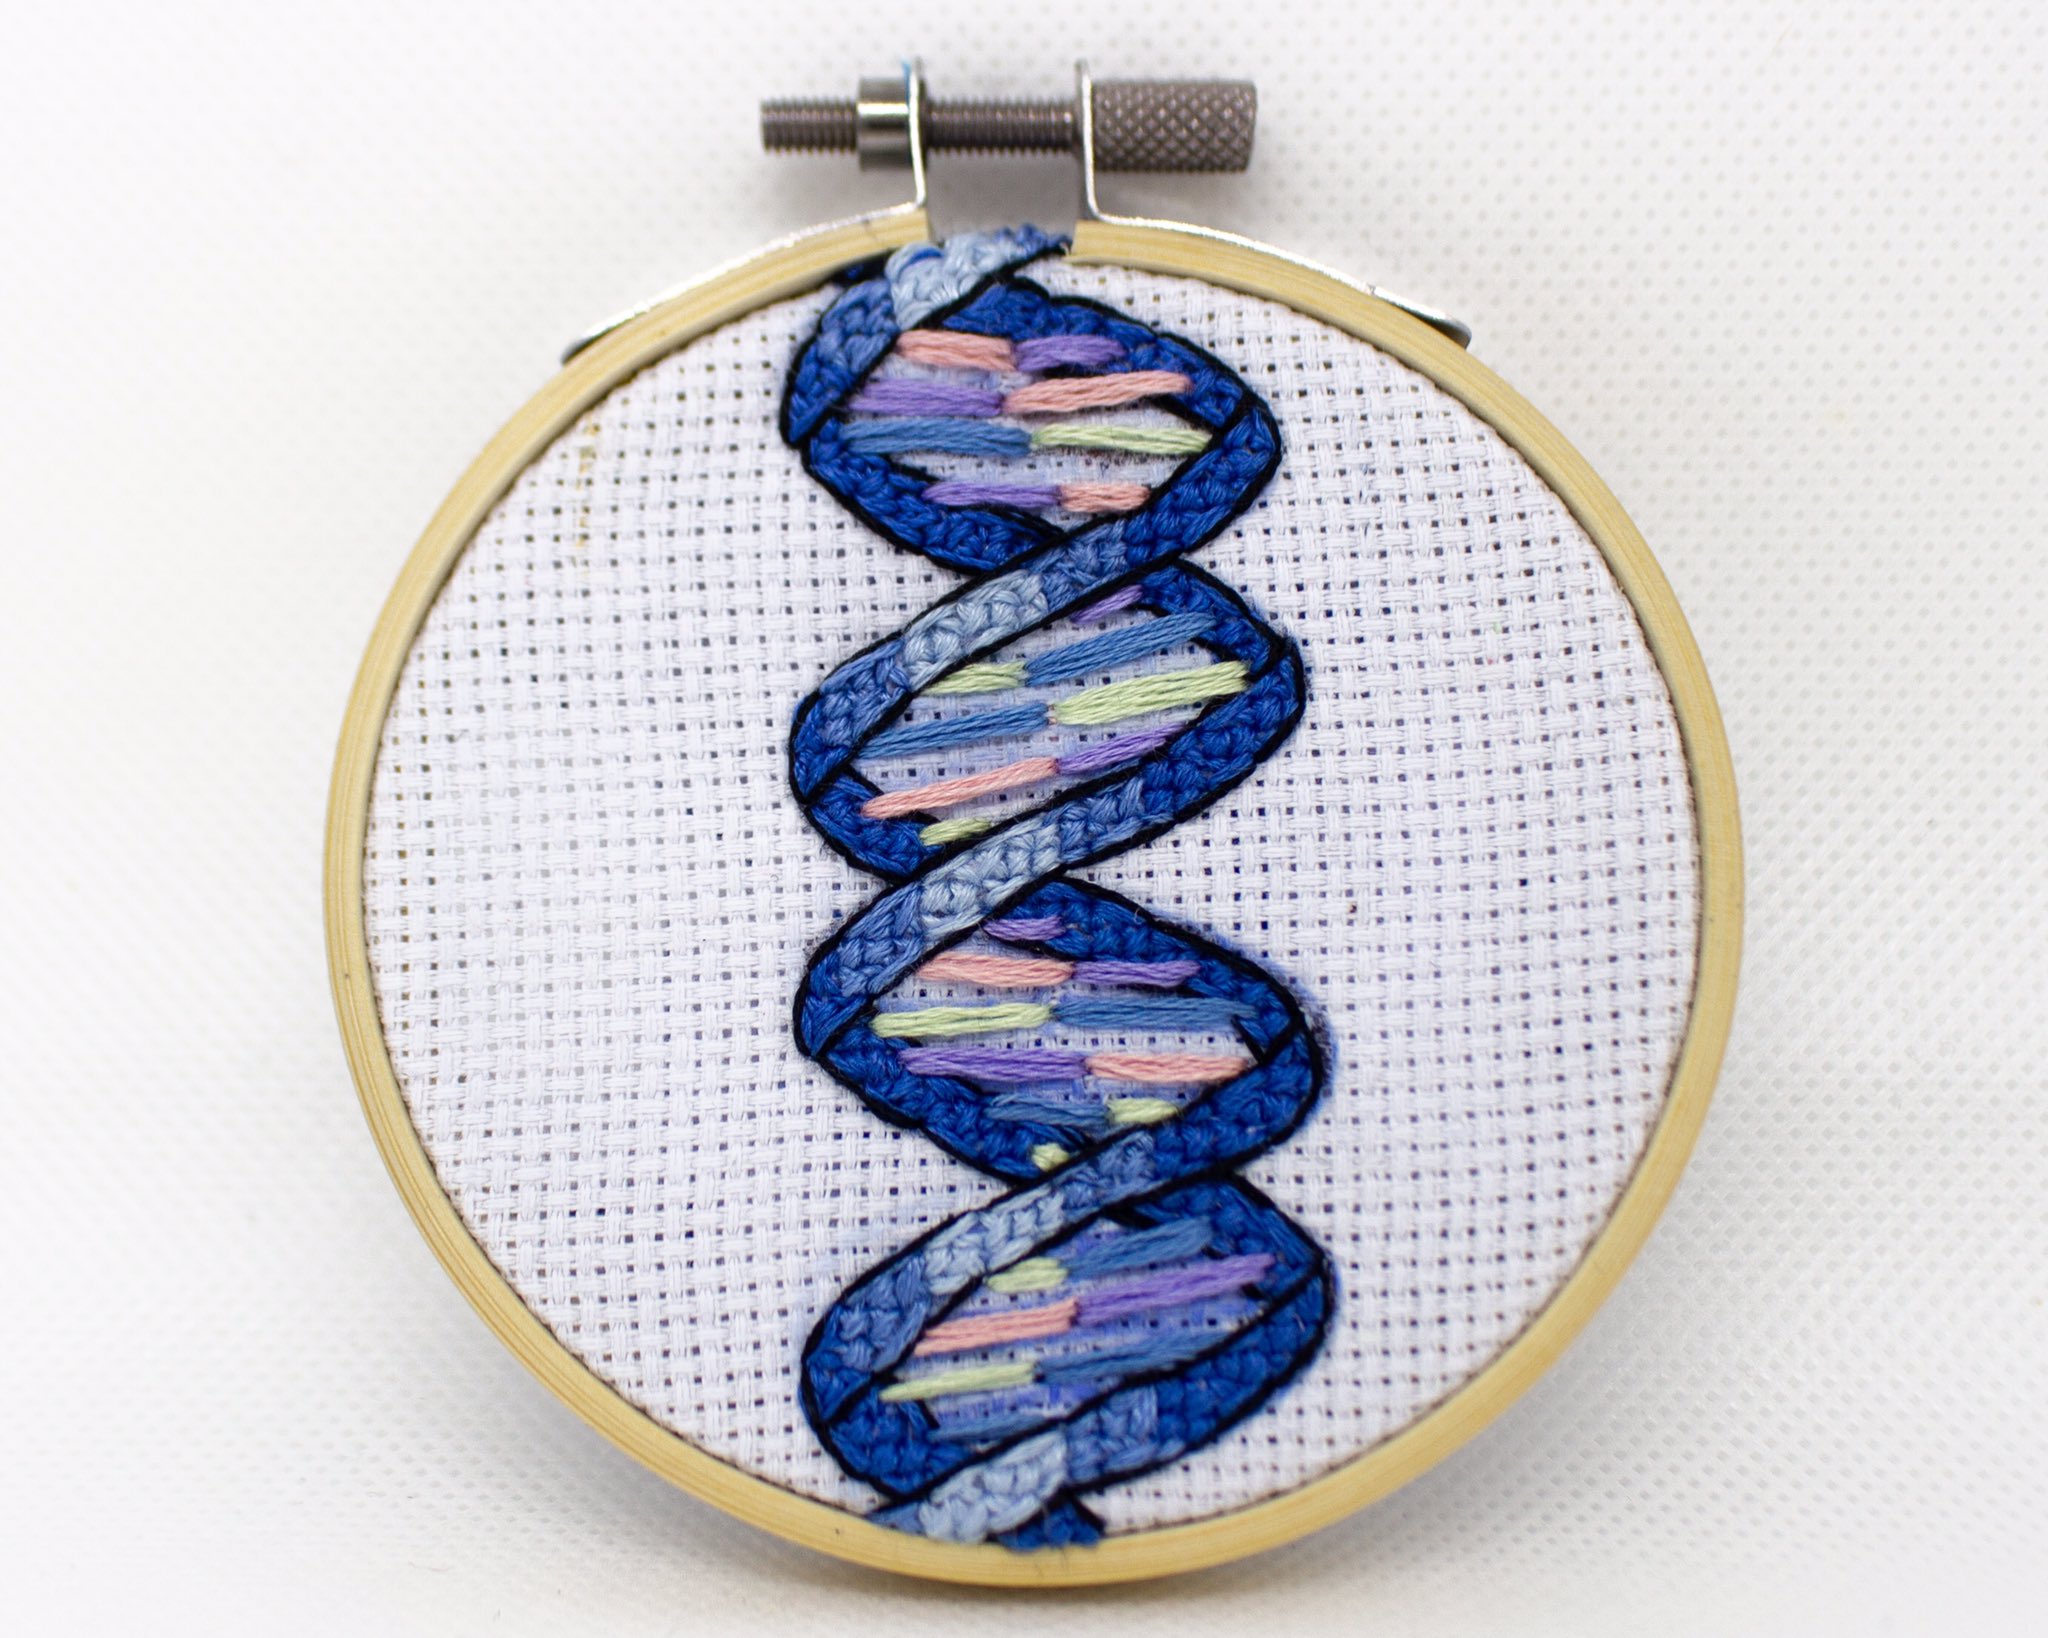 DNA Science Cross Stitch Pattern Digital Download PDF